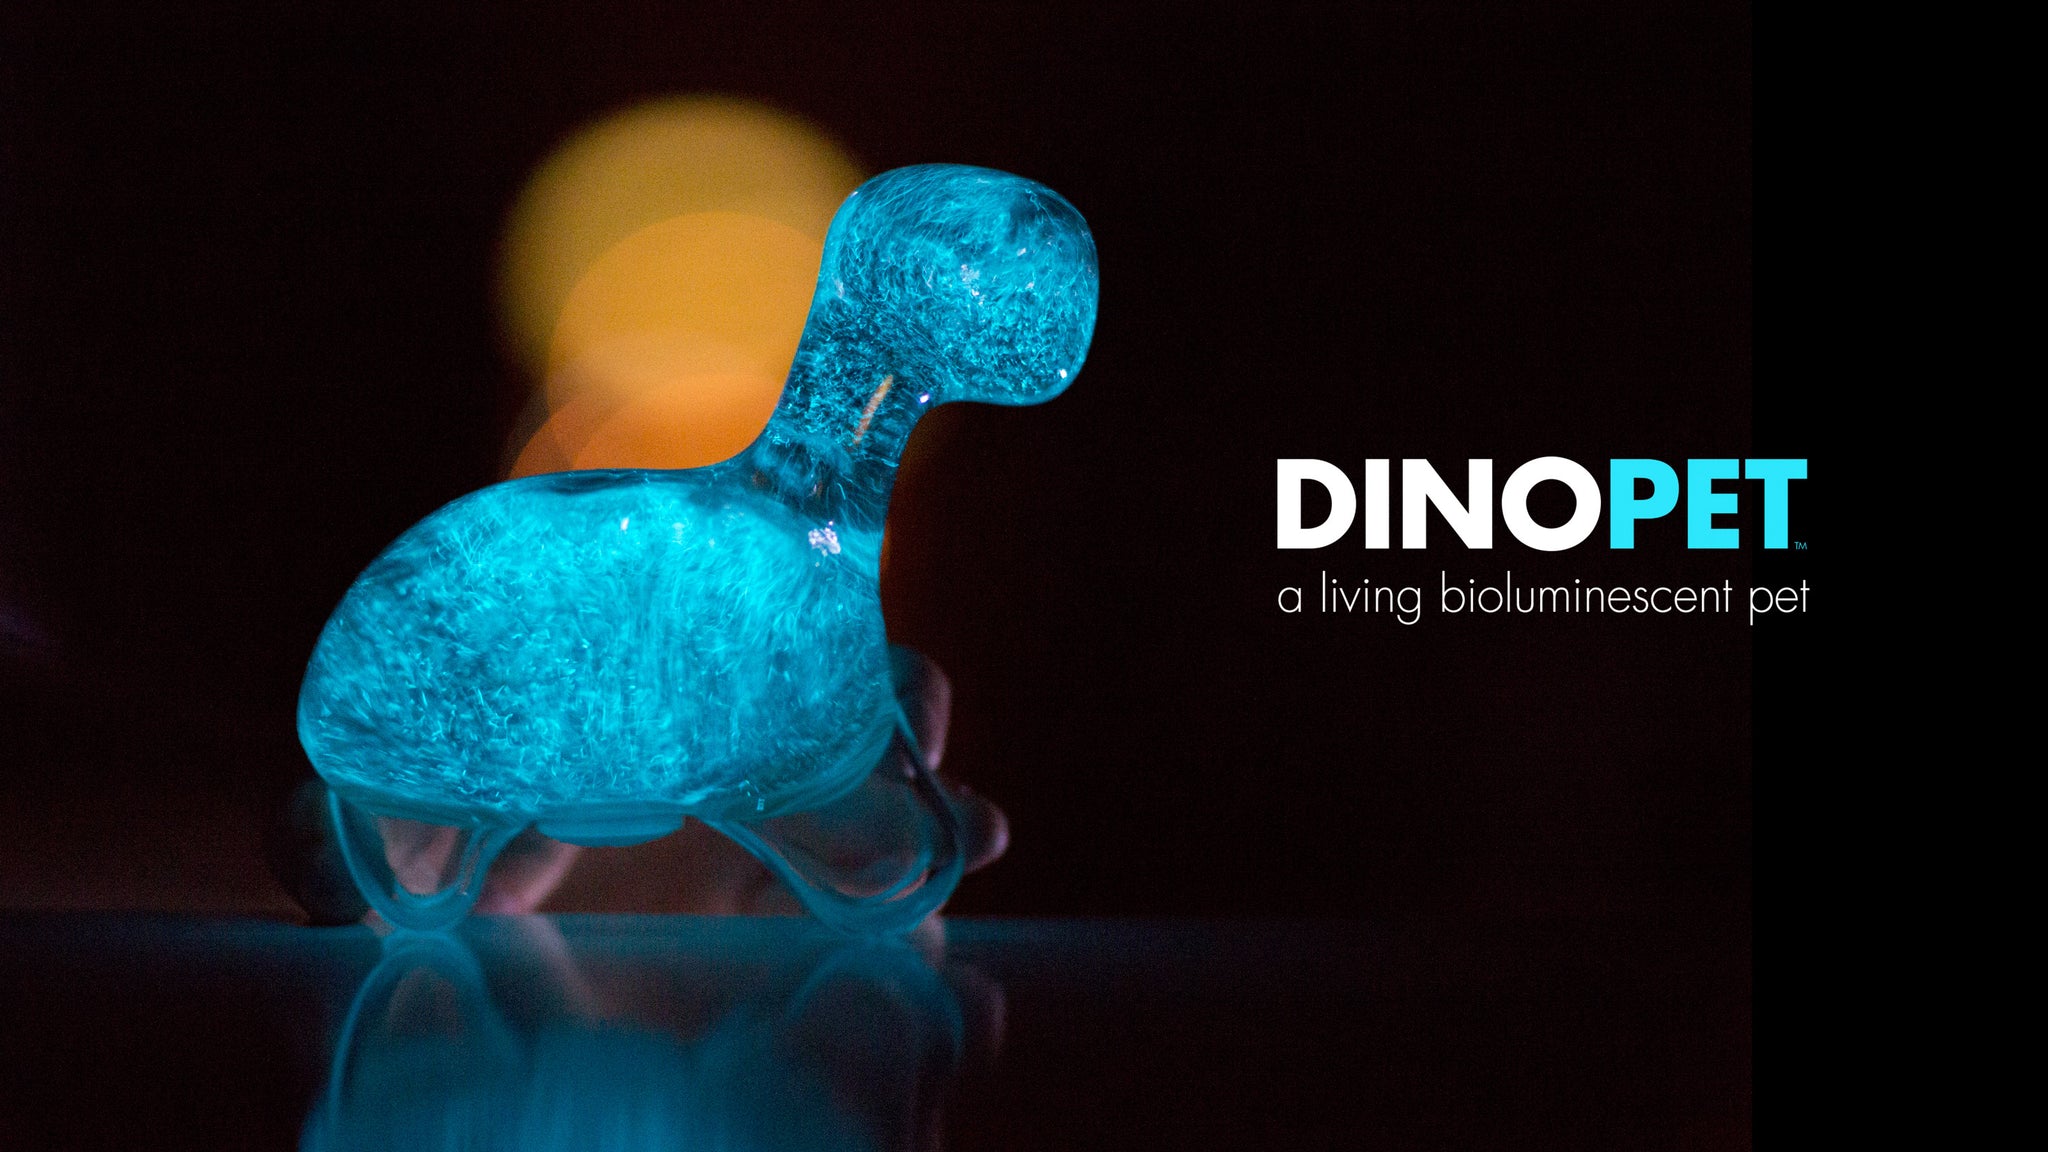 Dino Pet from BioPop